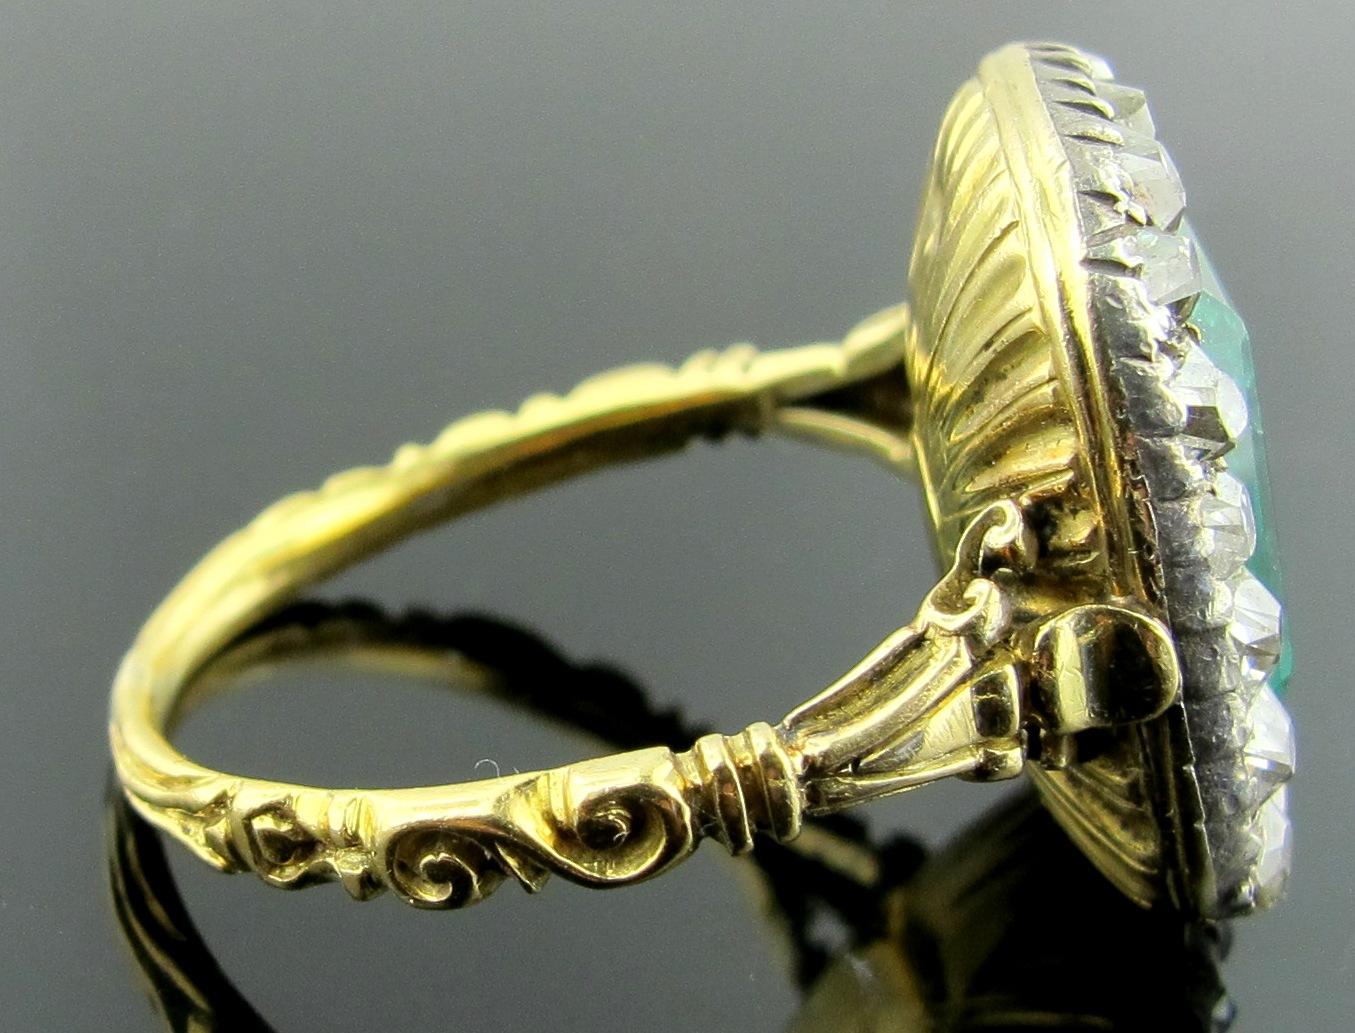 Emerald Cut 6 Carat Emerald and Diamond Ring, Silver on 14 Karat Gold, circa 1880